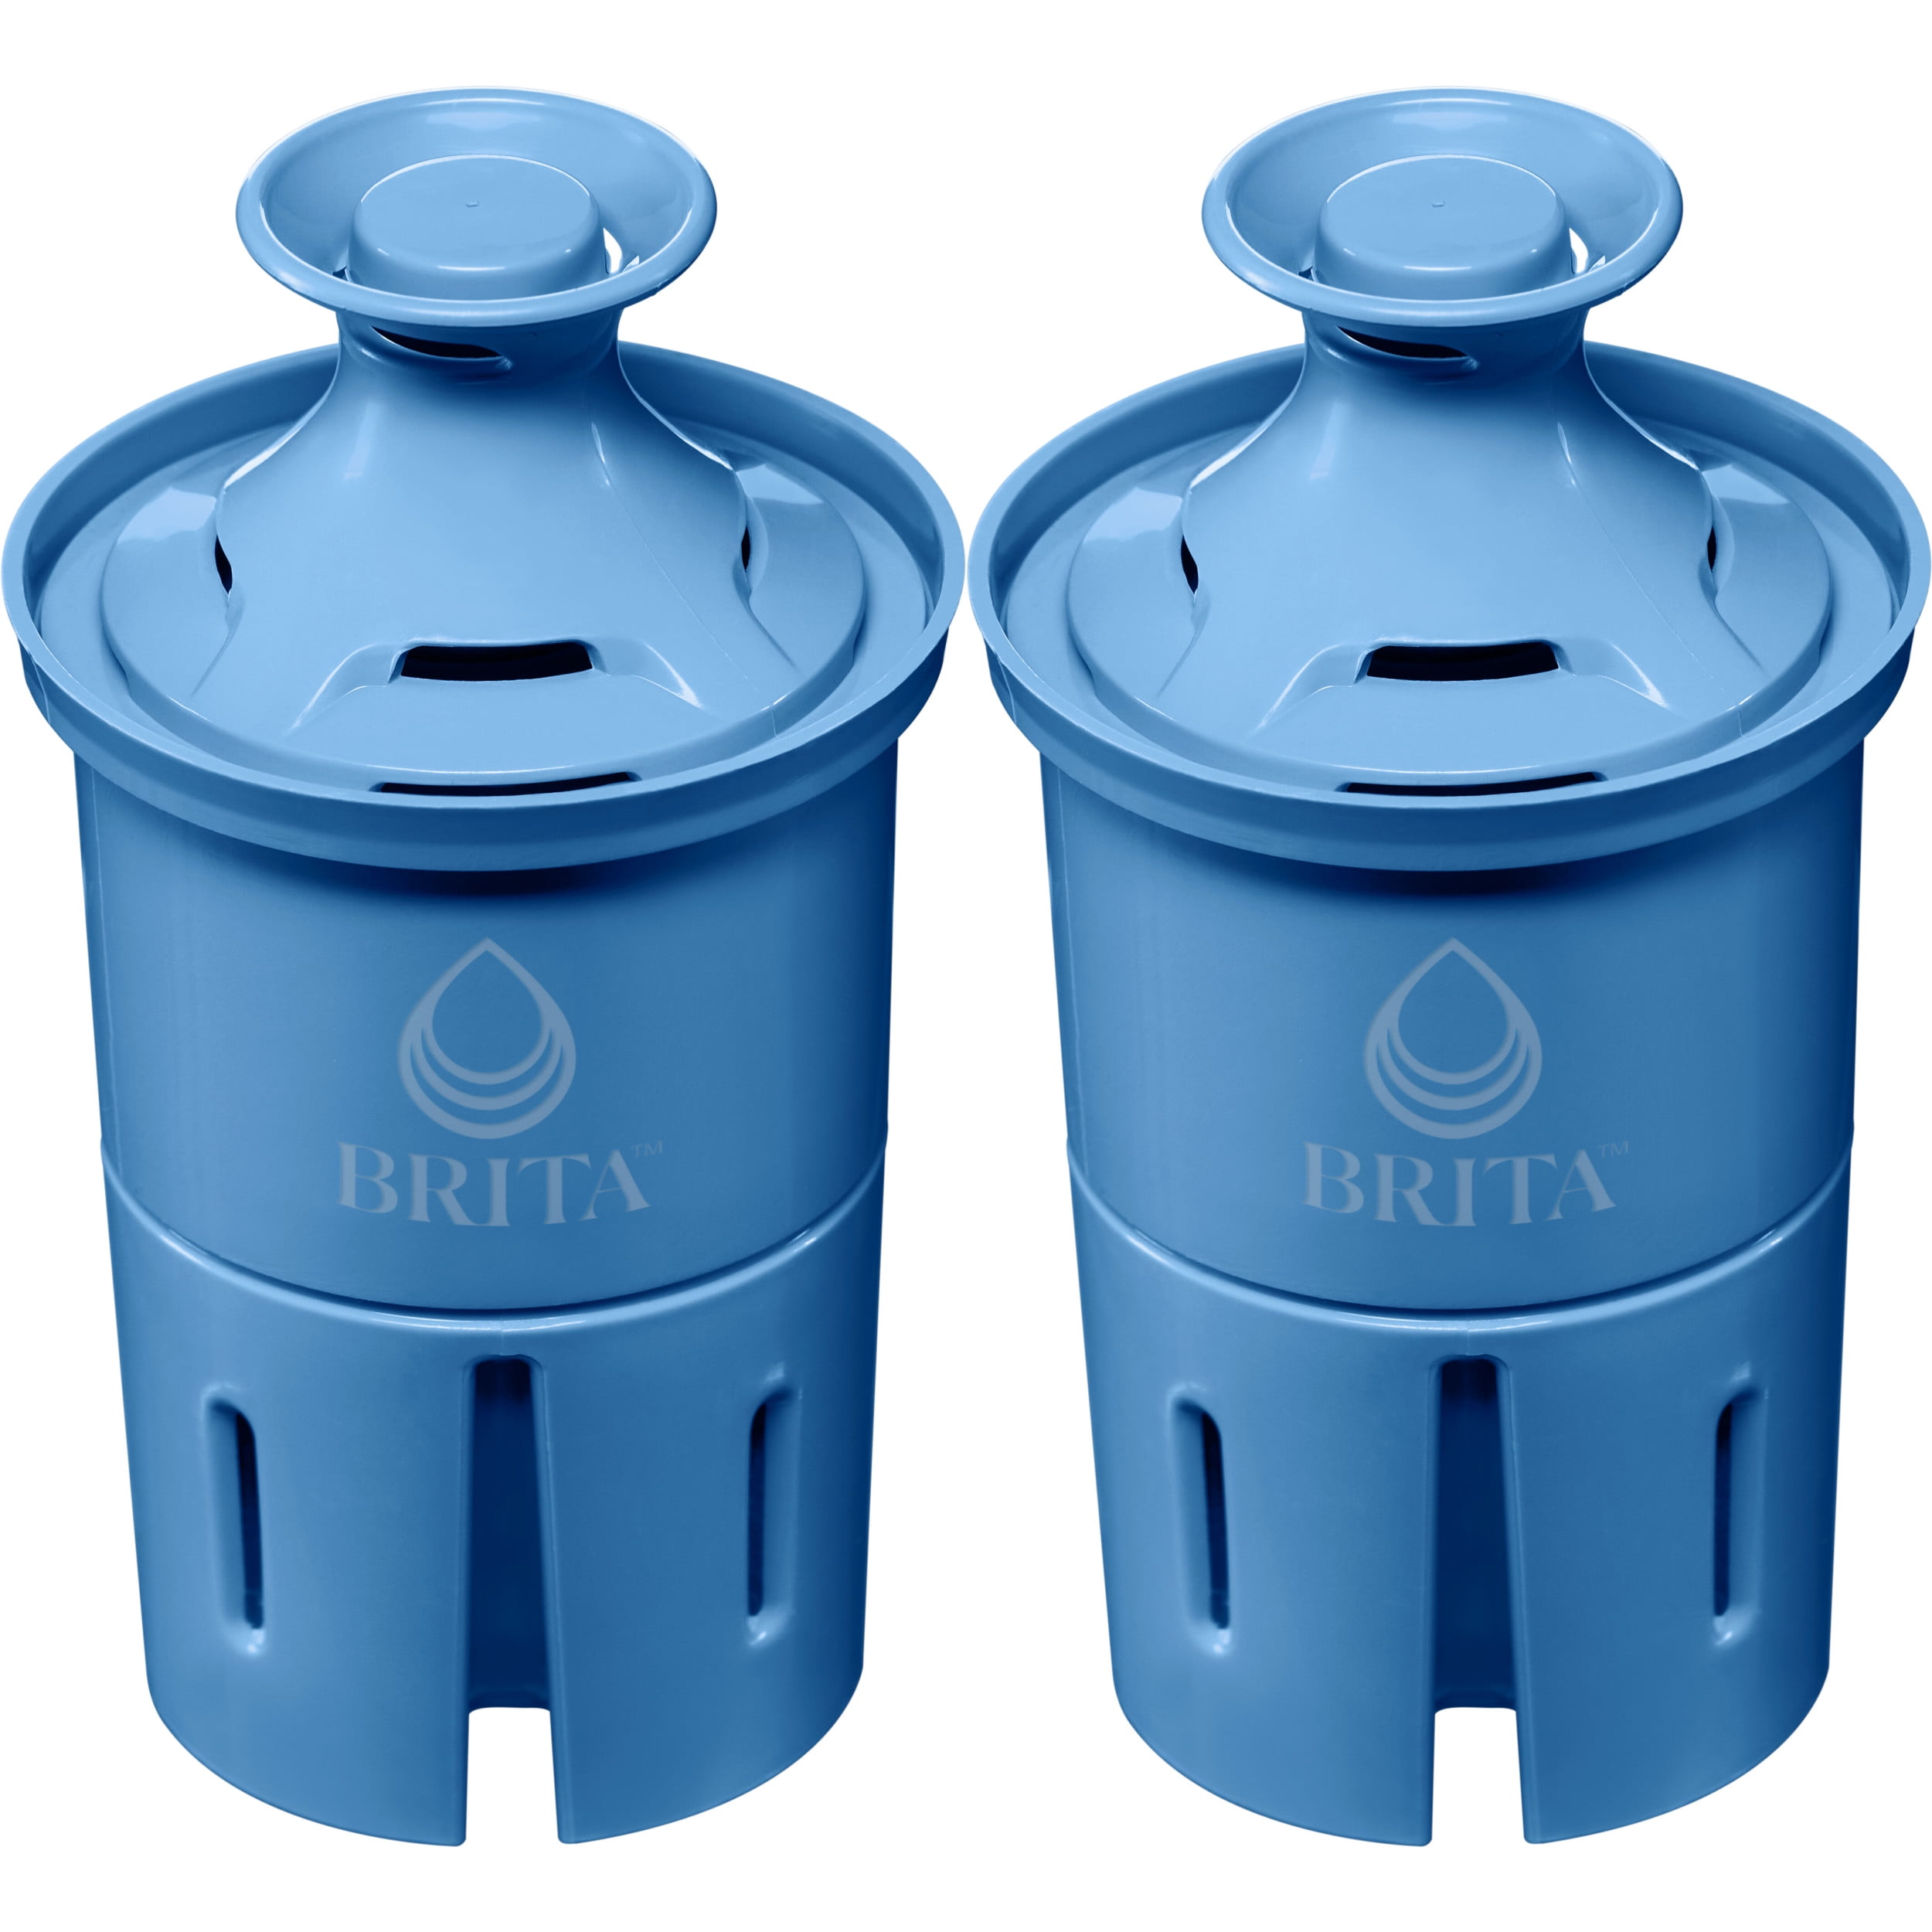 AQUACREST Replacement for Braun Brita KWF2 Coffee Water Filter